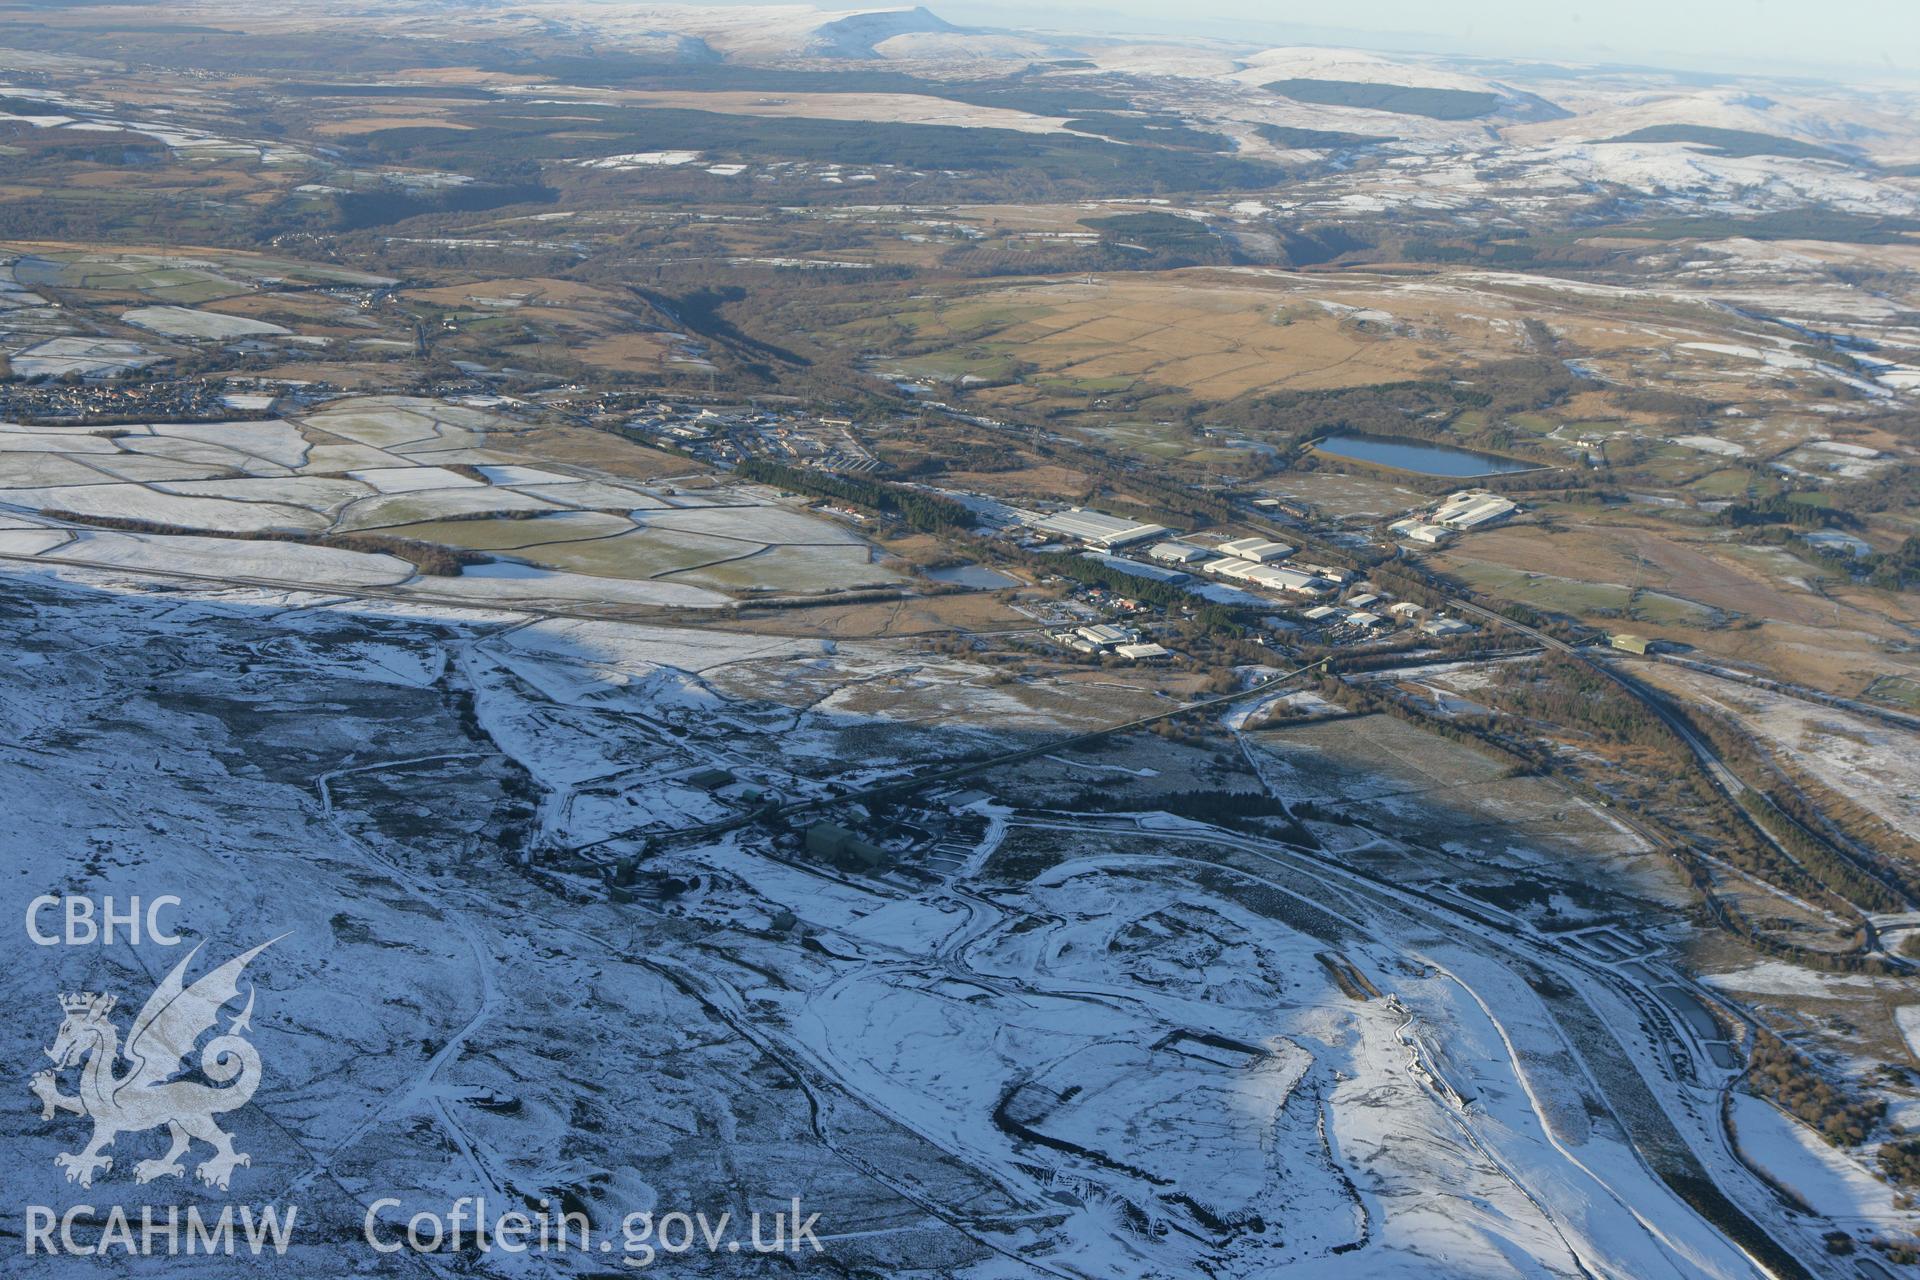 RCAHMW colour oblique photograph of Tower Drift Mine landscape. Taken by Toby Driver on 08/12/2010.